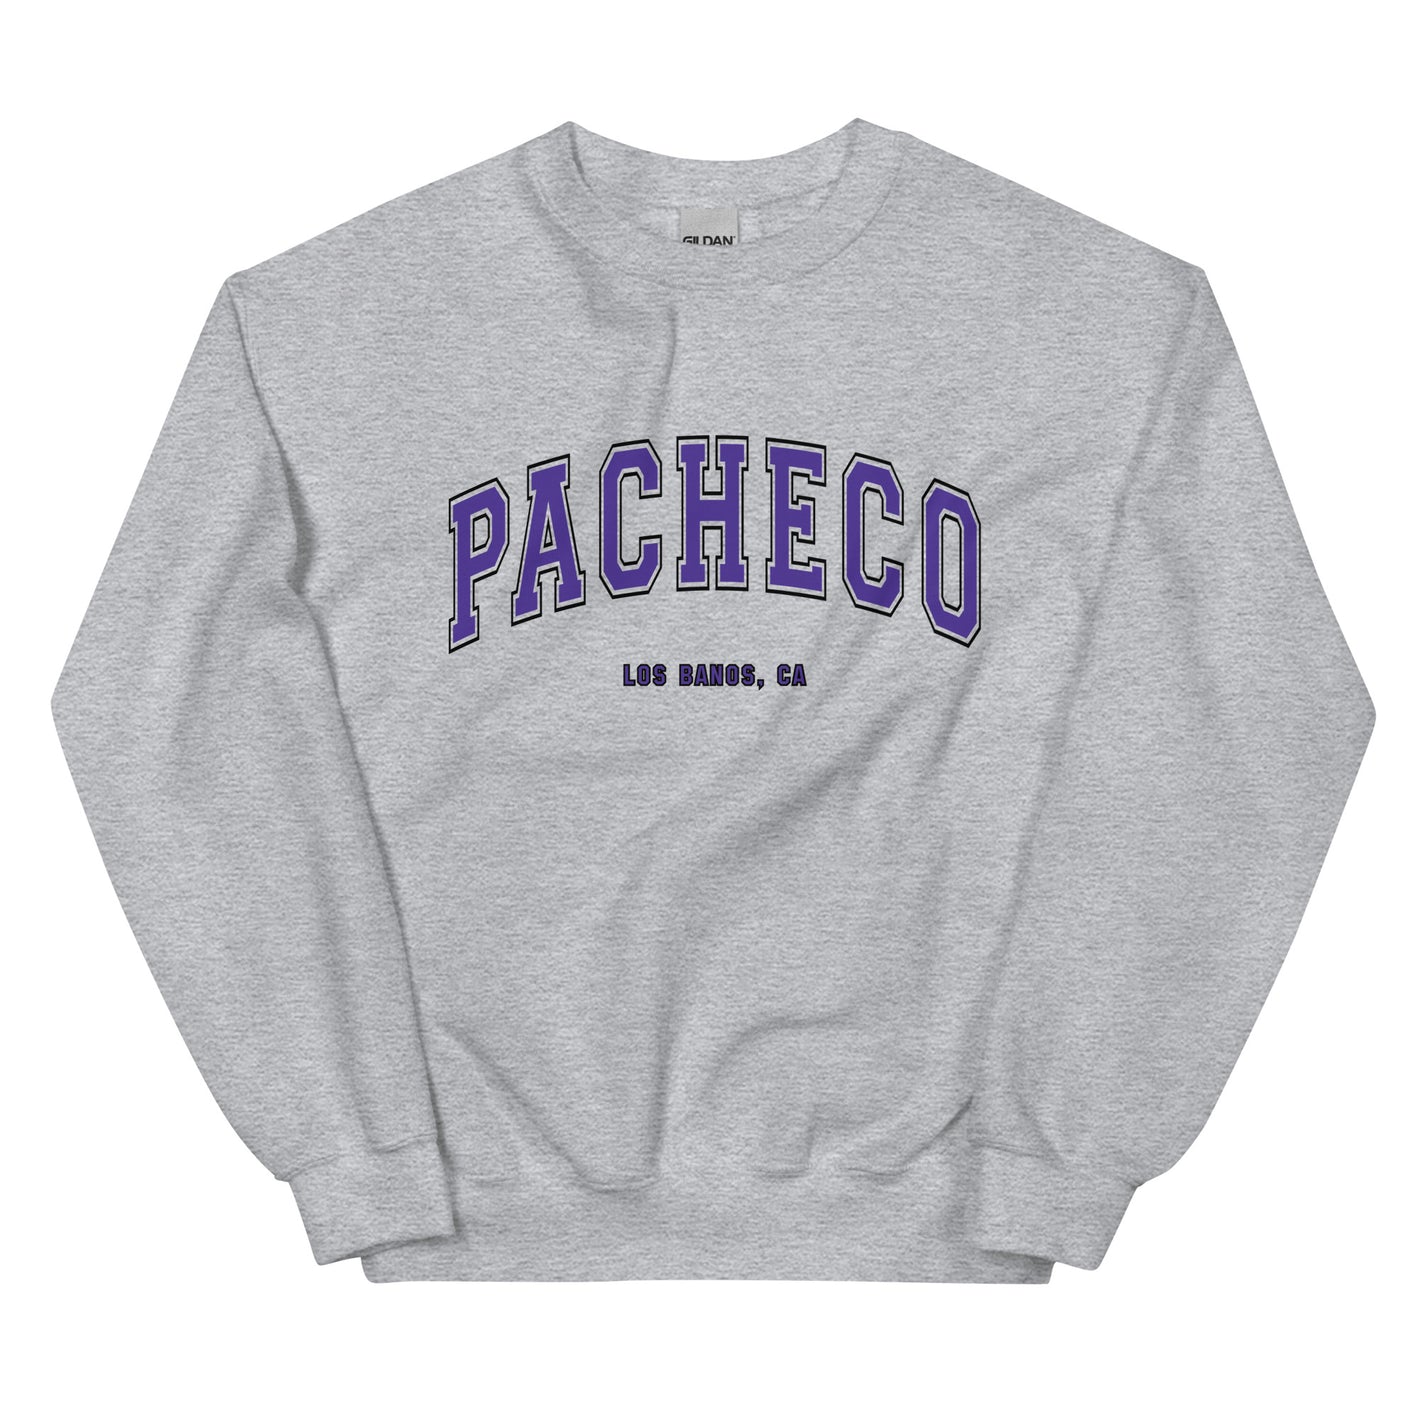 Pacheco Unisex Sweatshirt